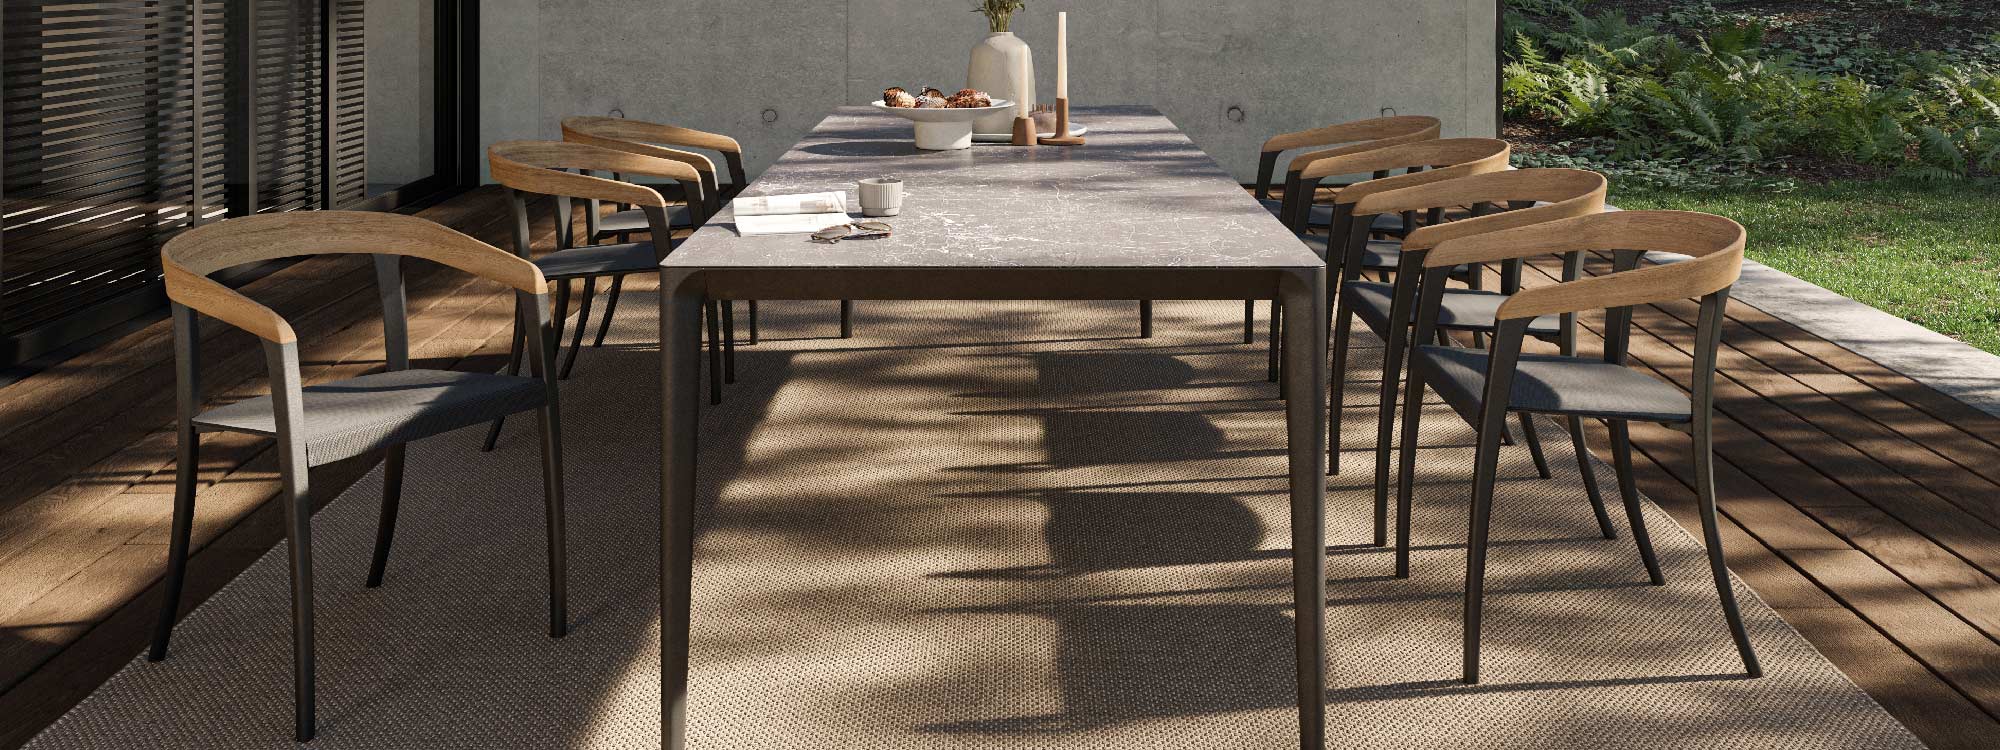 Image of Jive modern garden chairs around U-nite luxury dining table by Royal Botania